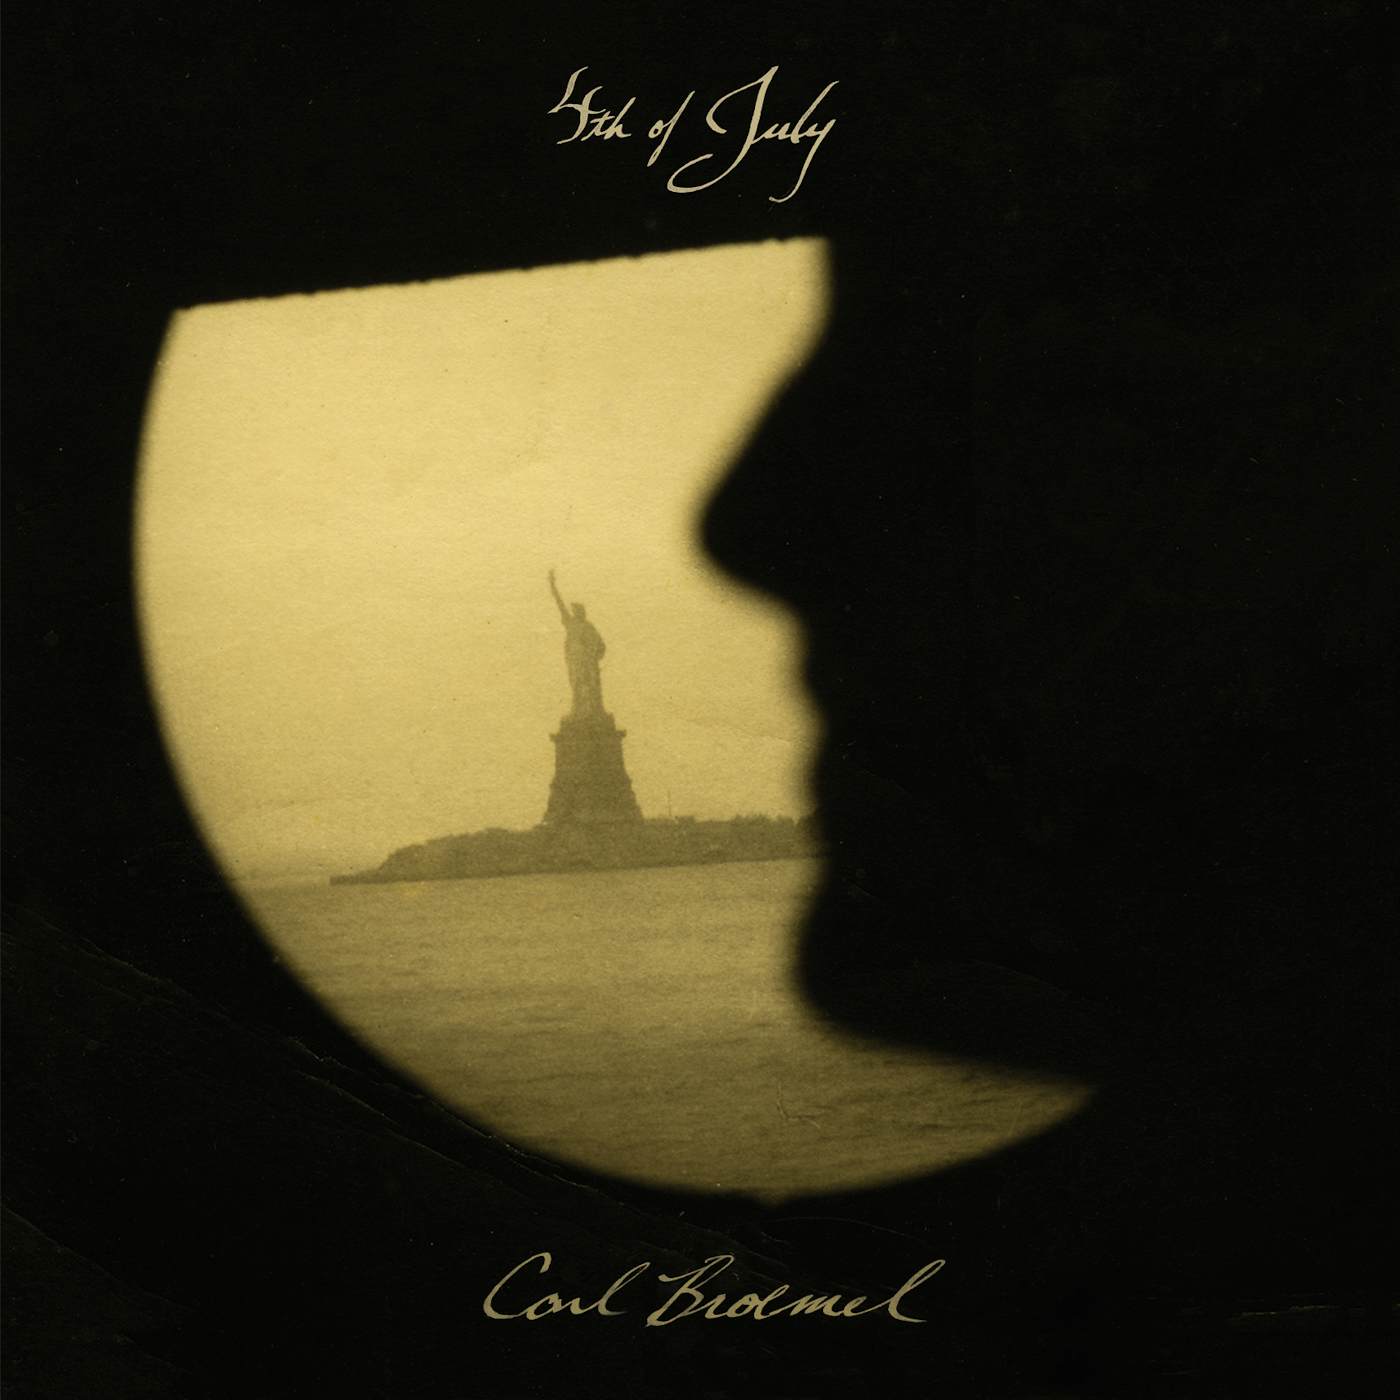 Carl Broemel 4th of July Vinyl Record